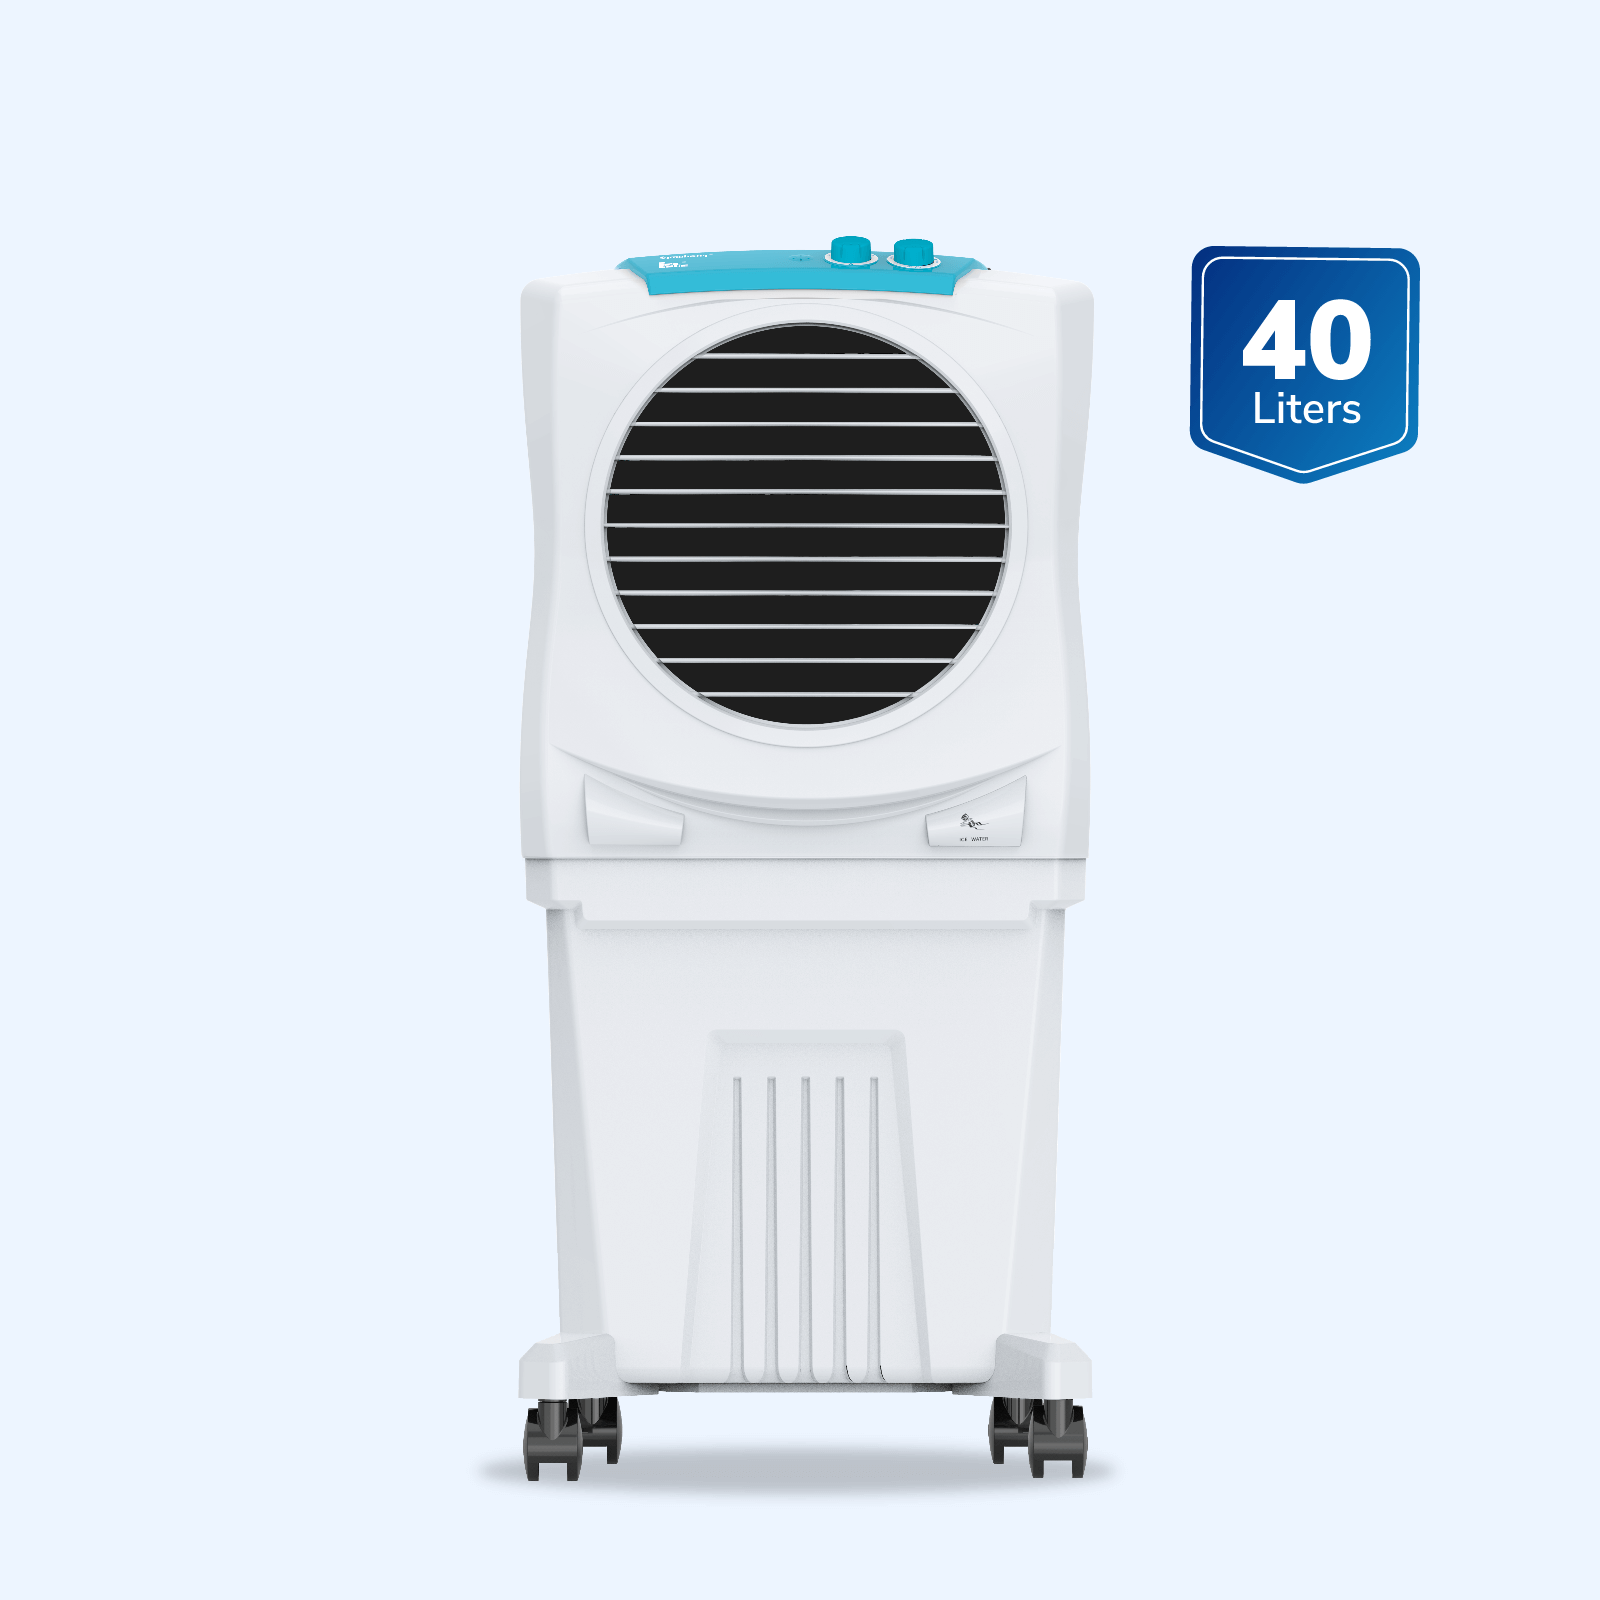 Sumo 40XL Personal Air Cooler, 40 Litres